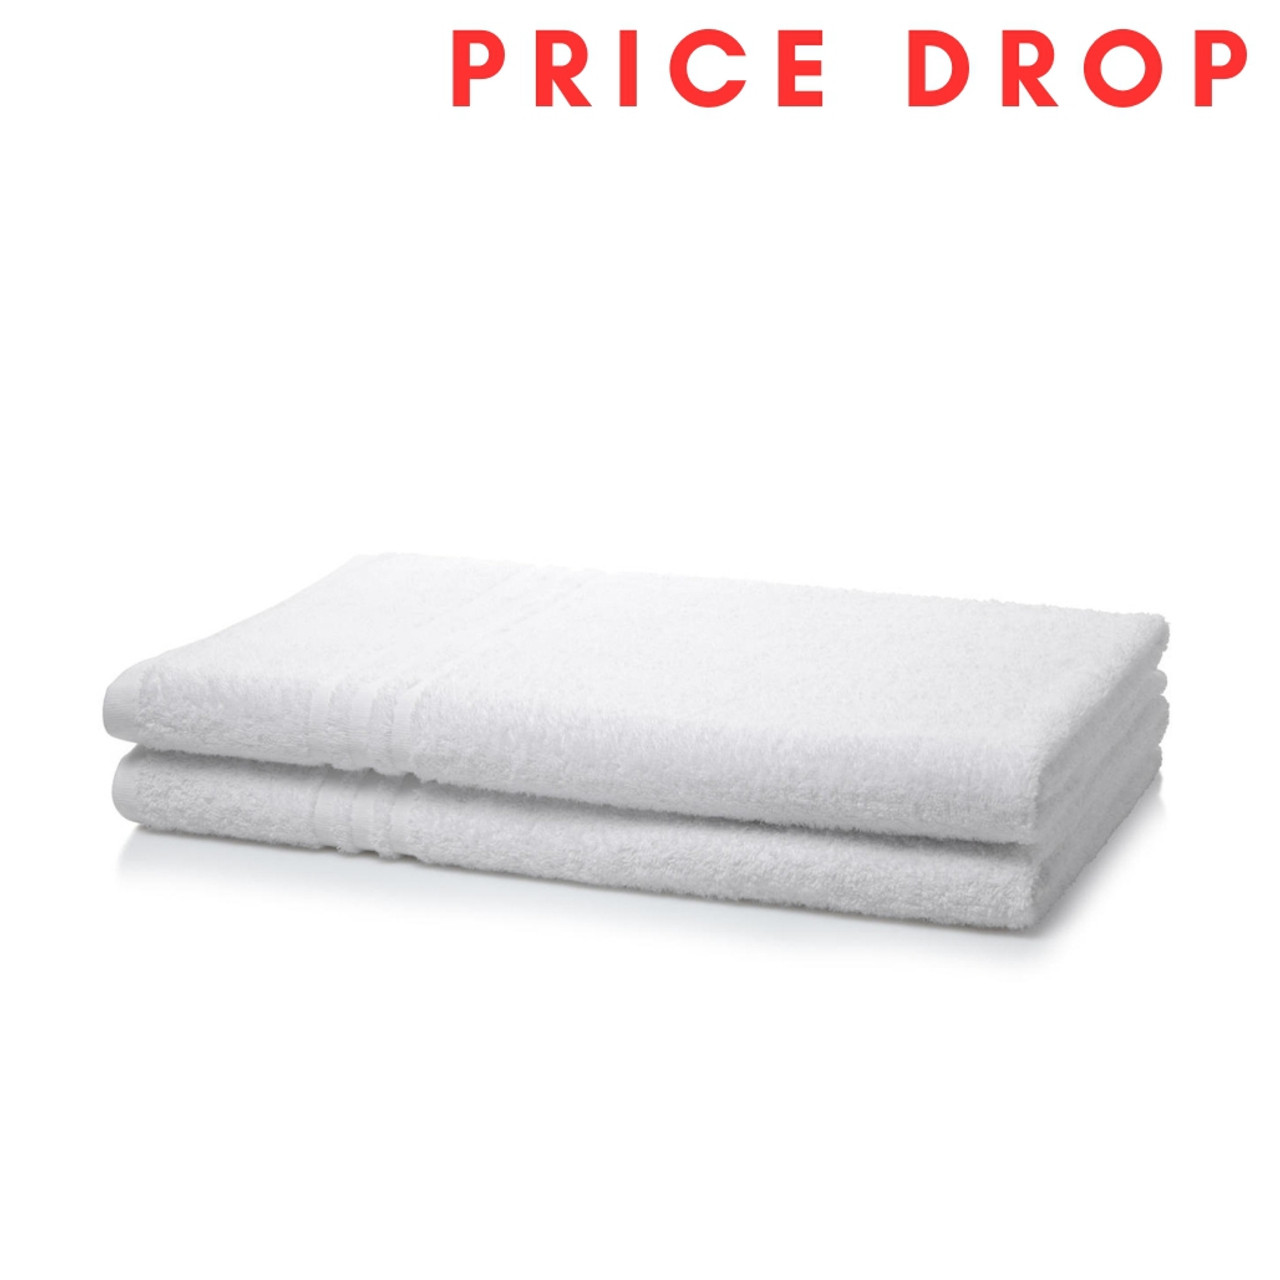 HOTEL QUALITY LARGE SIZE Bath Sheet WILSFORD 1, 2, 3, 4PK Set Soft 500 GSM  Towel